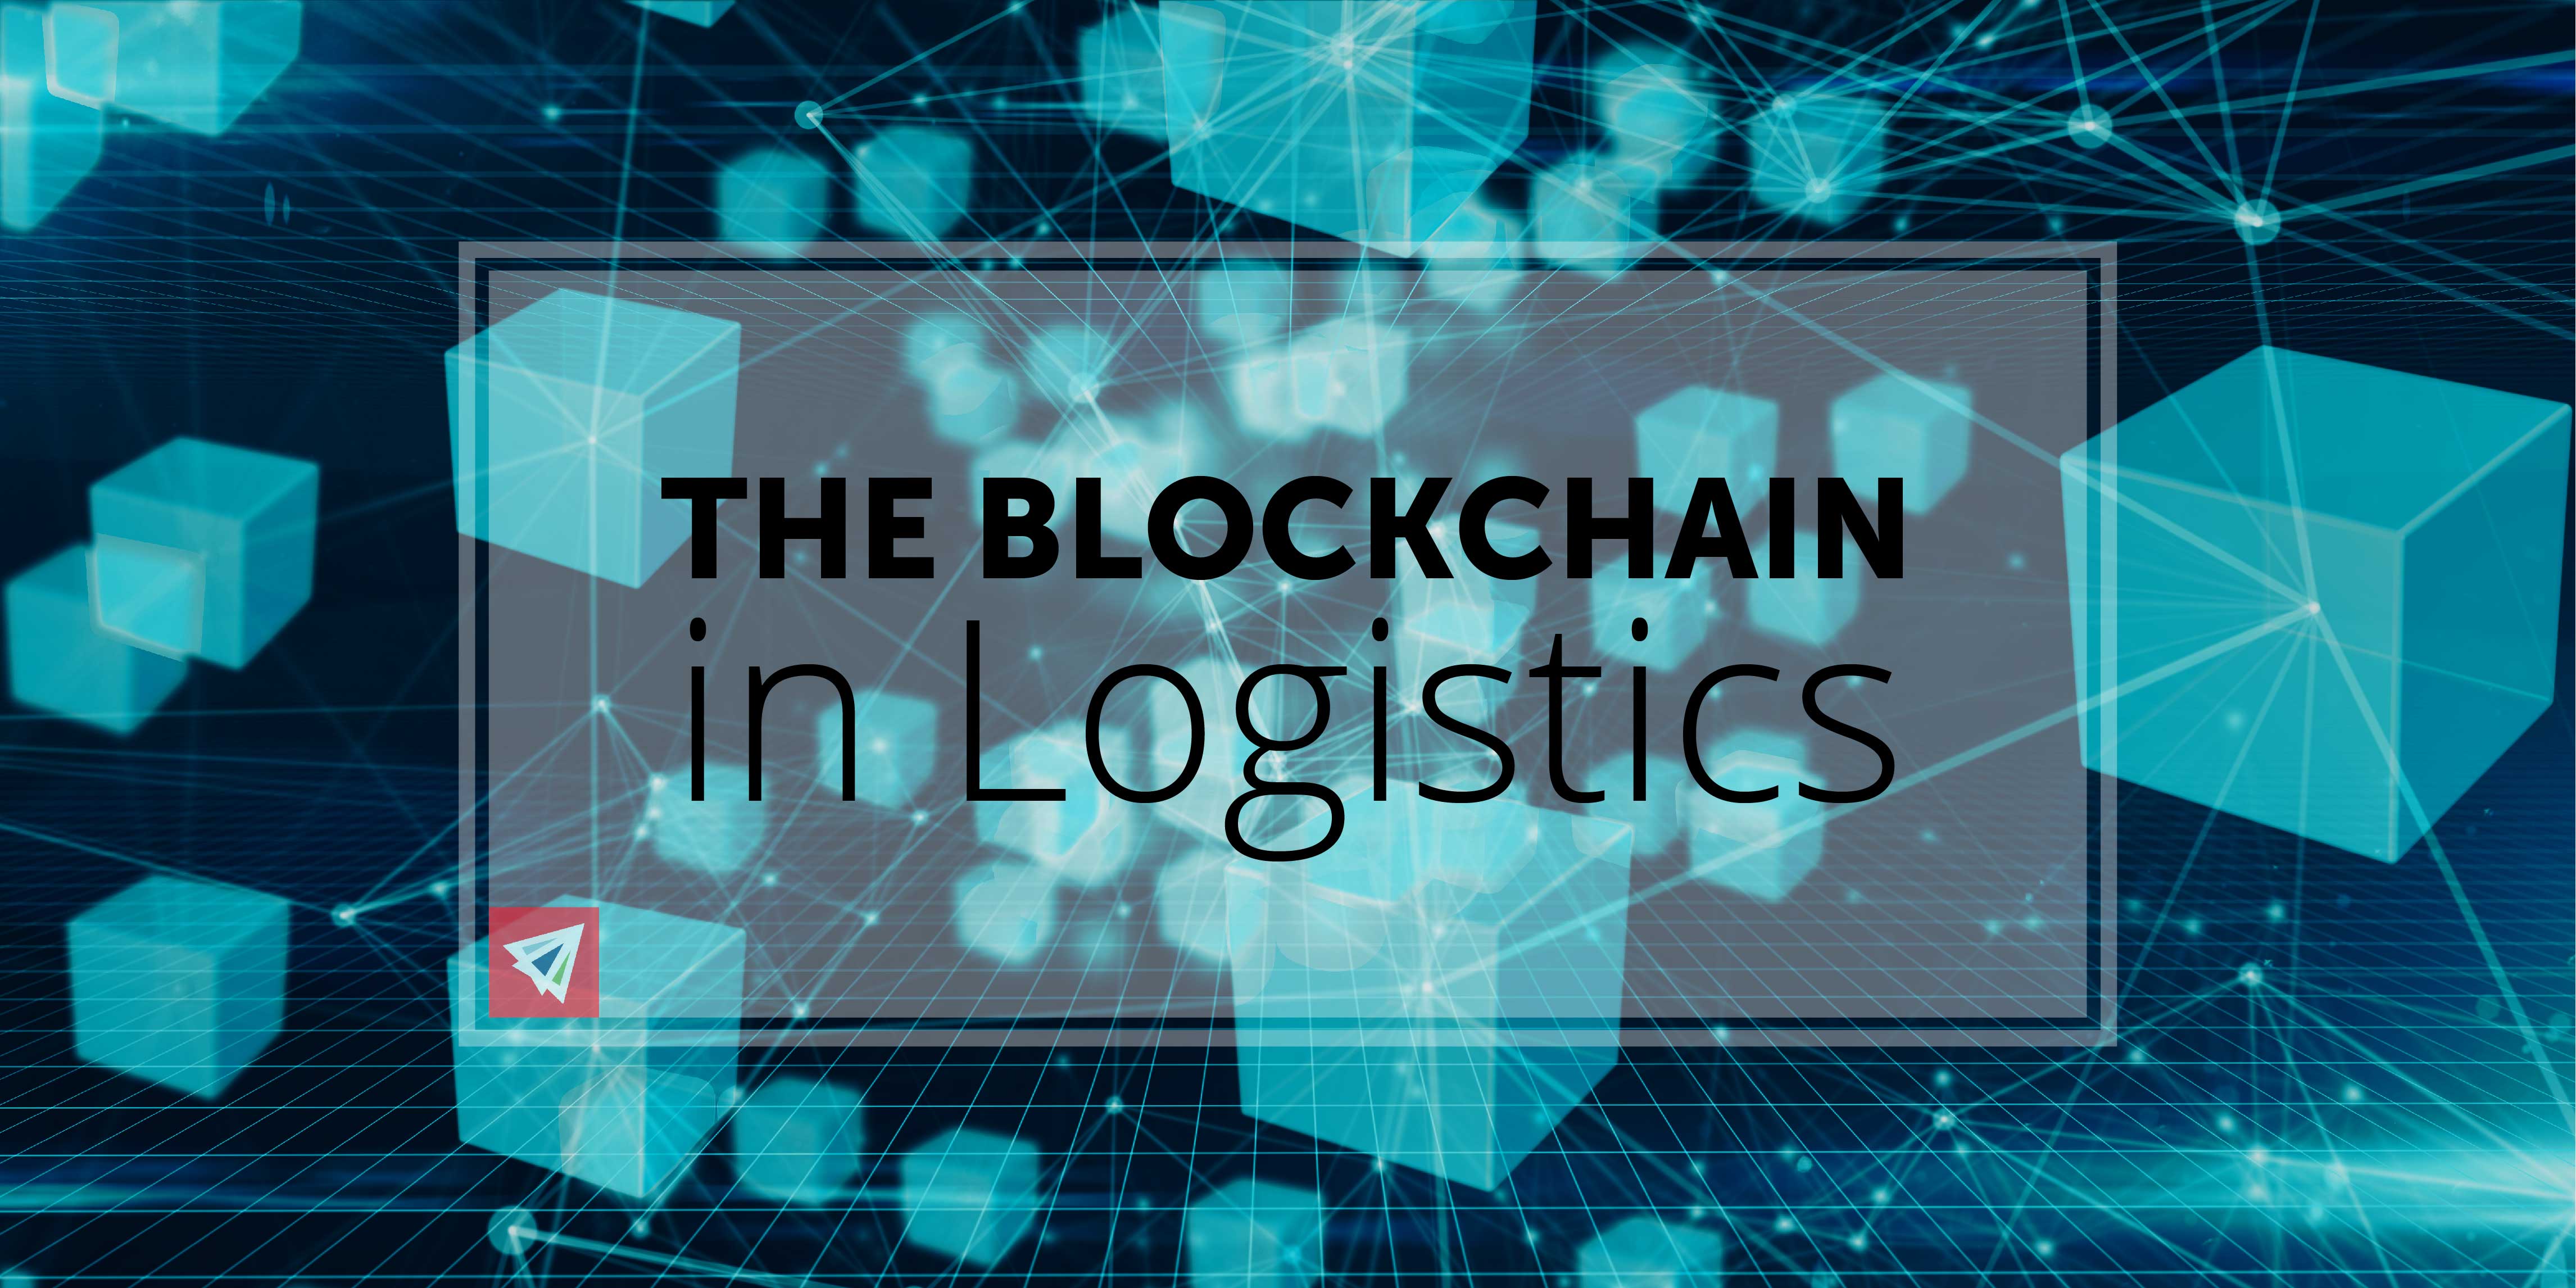 The Blockchain in Logistics